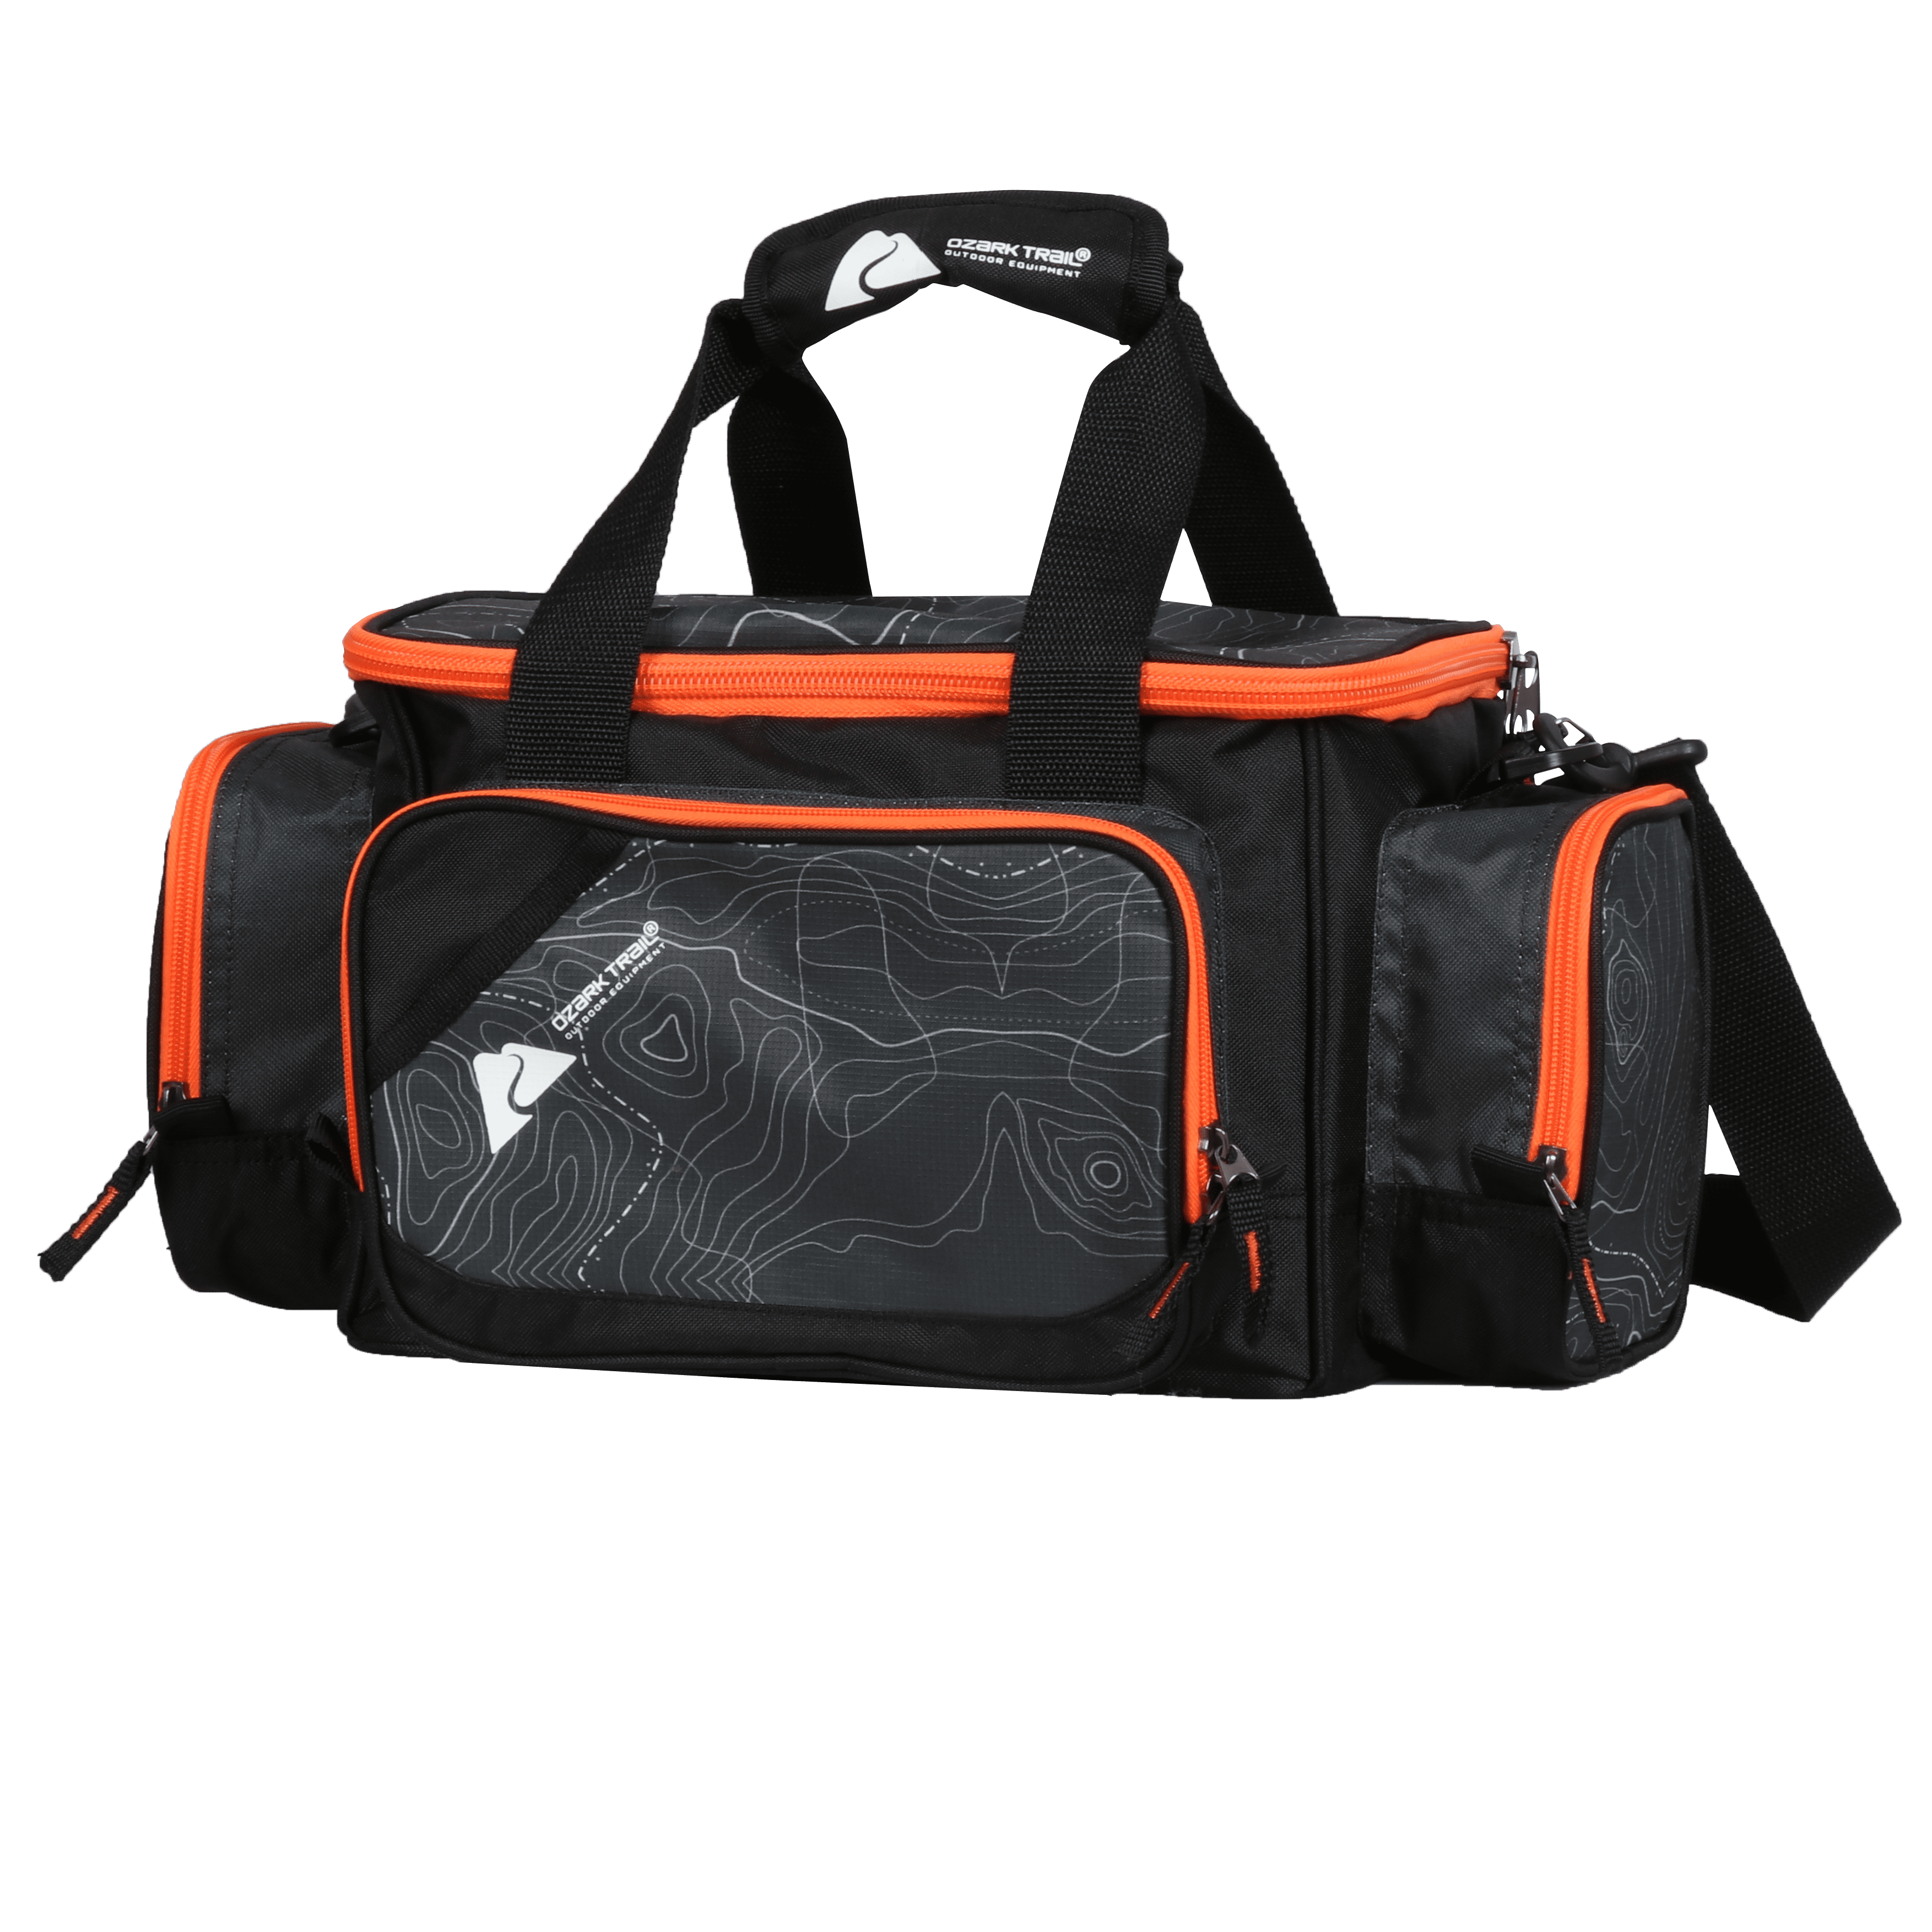 Plano KVD Series 3600 Soft Sided Tackle Bag Mossy Oak 